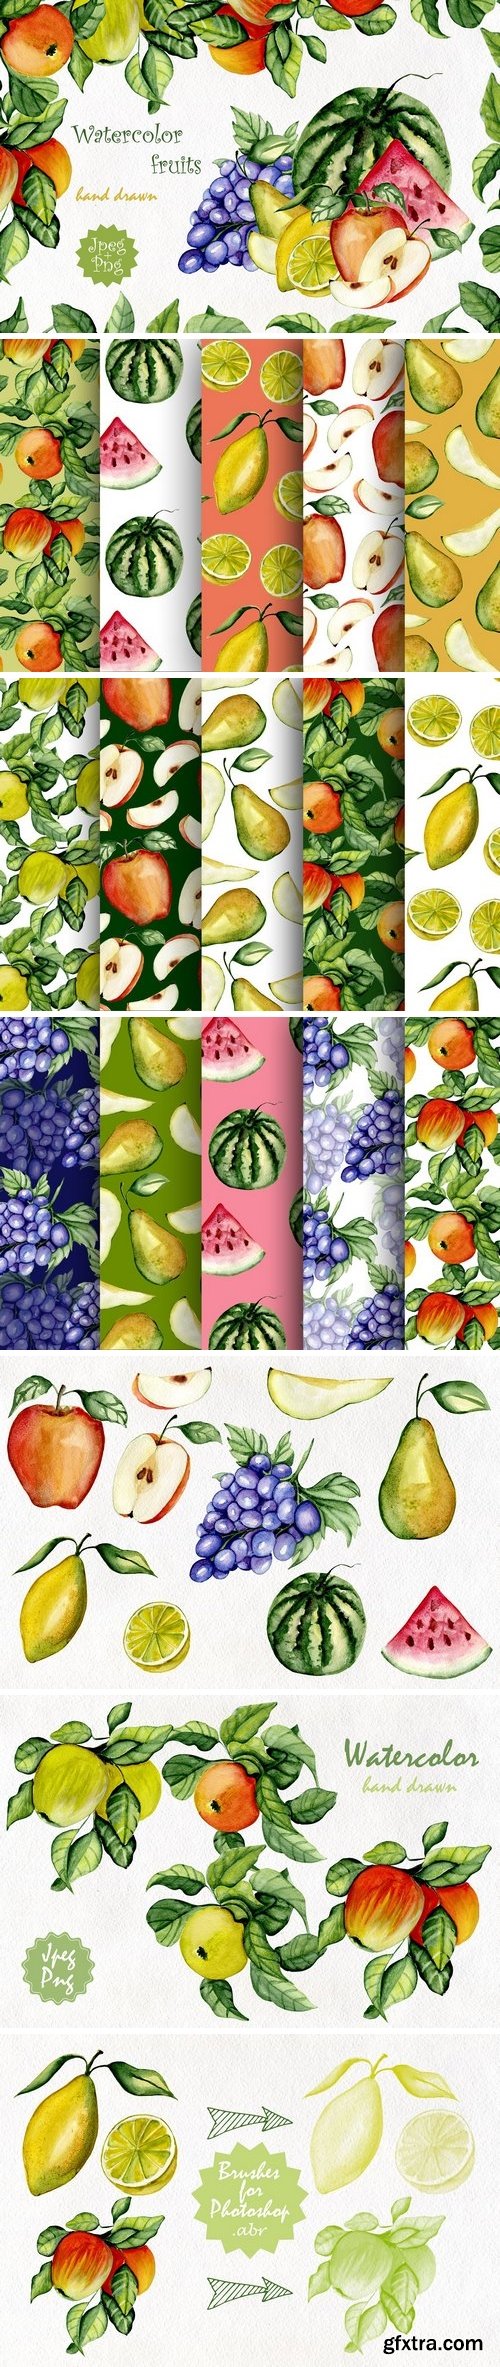 CM - Watercolor fruits 542760